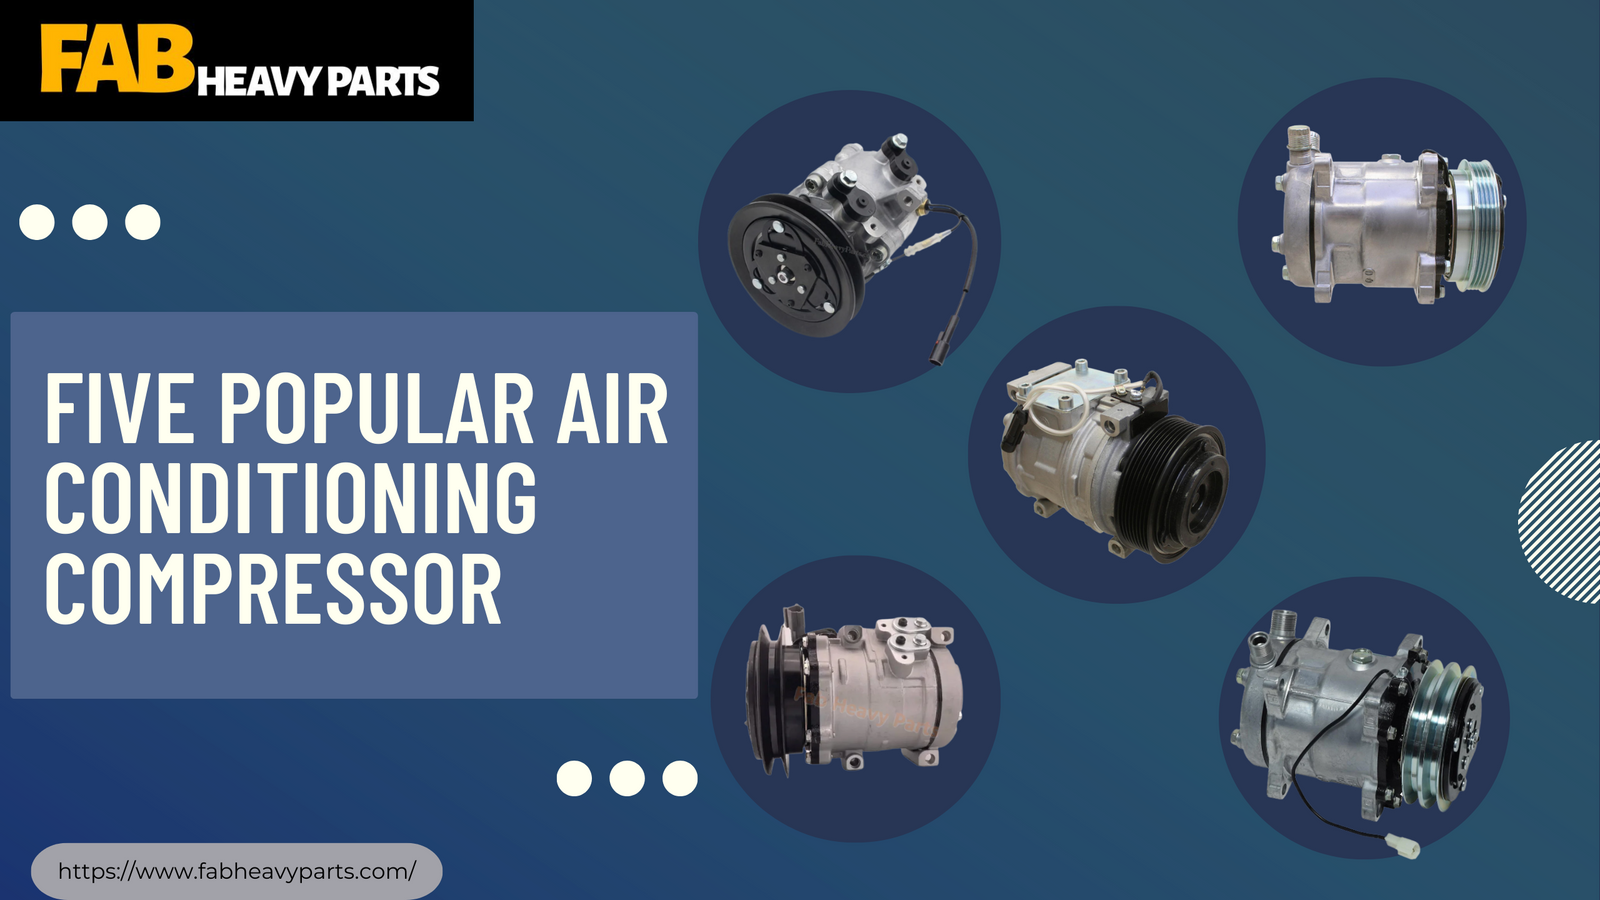 Five Popular Air Conditioning Compressor